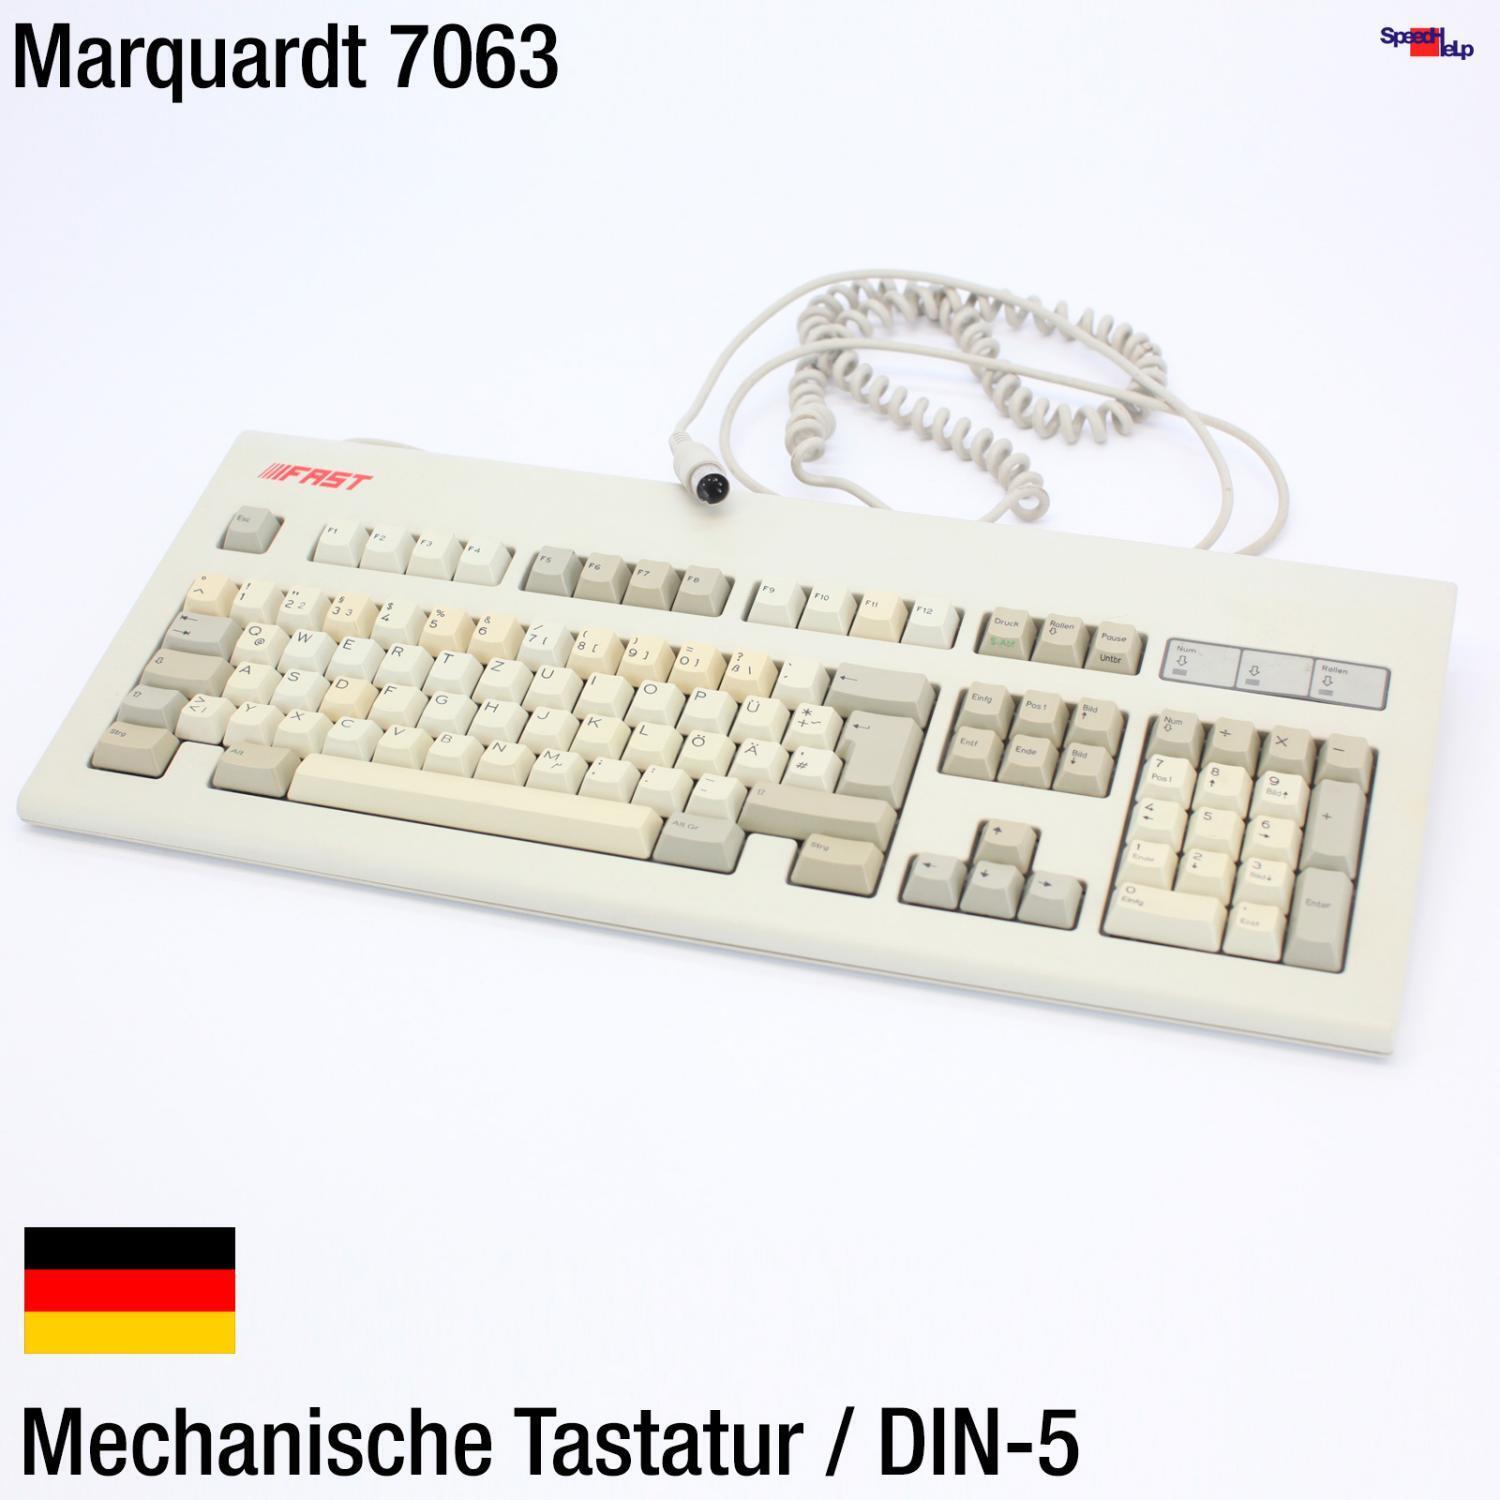 Fast Marquardt 7063.1230 At DIN-5 DIN5 Keyboard Mechanical Retro Old